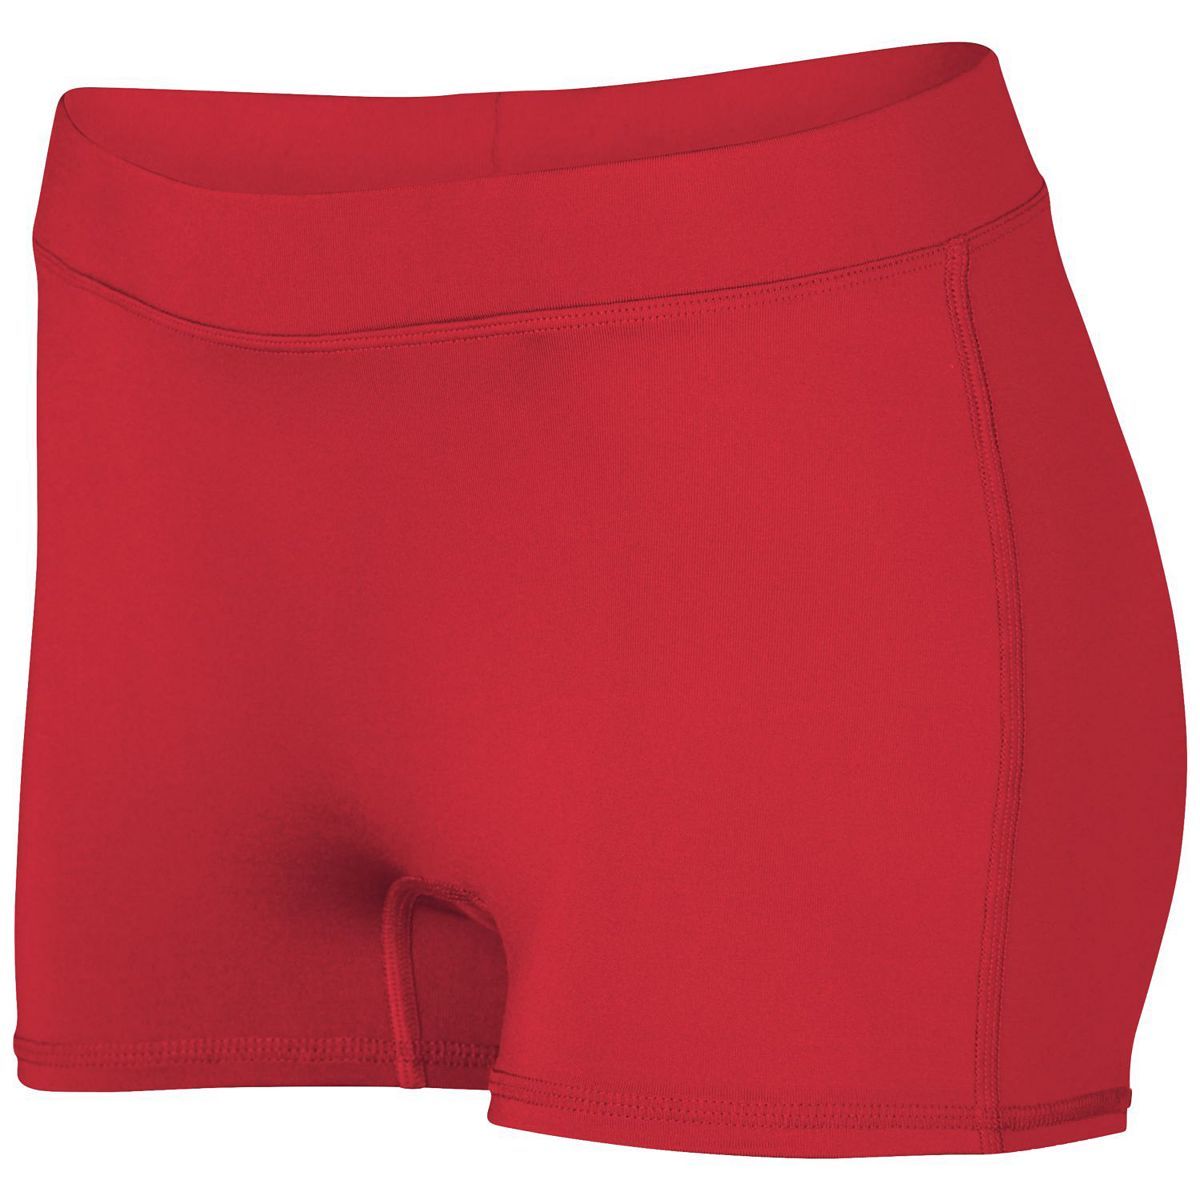 Filles Dare Shorts - 1233